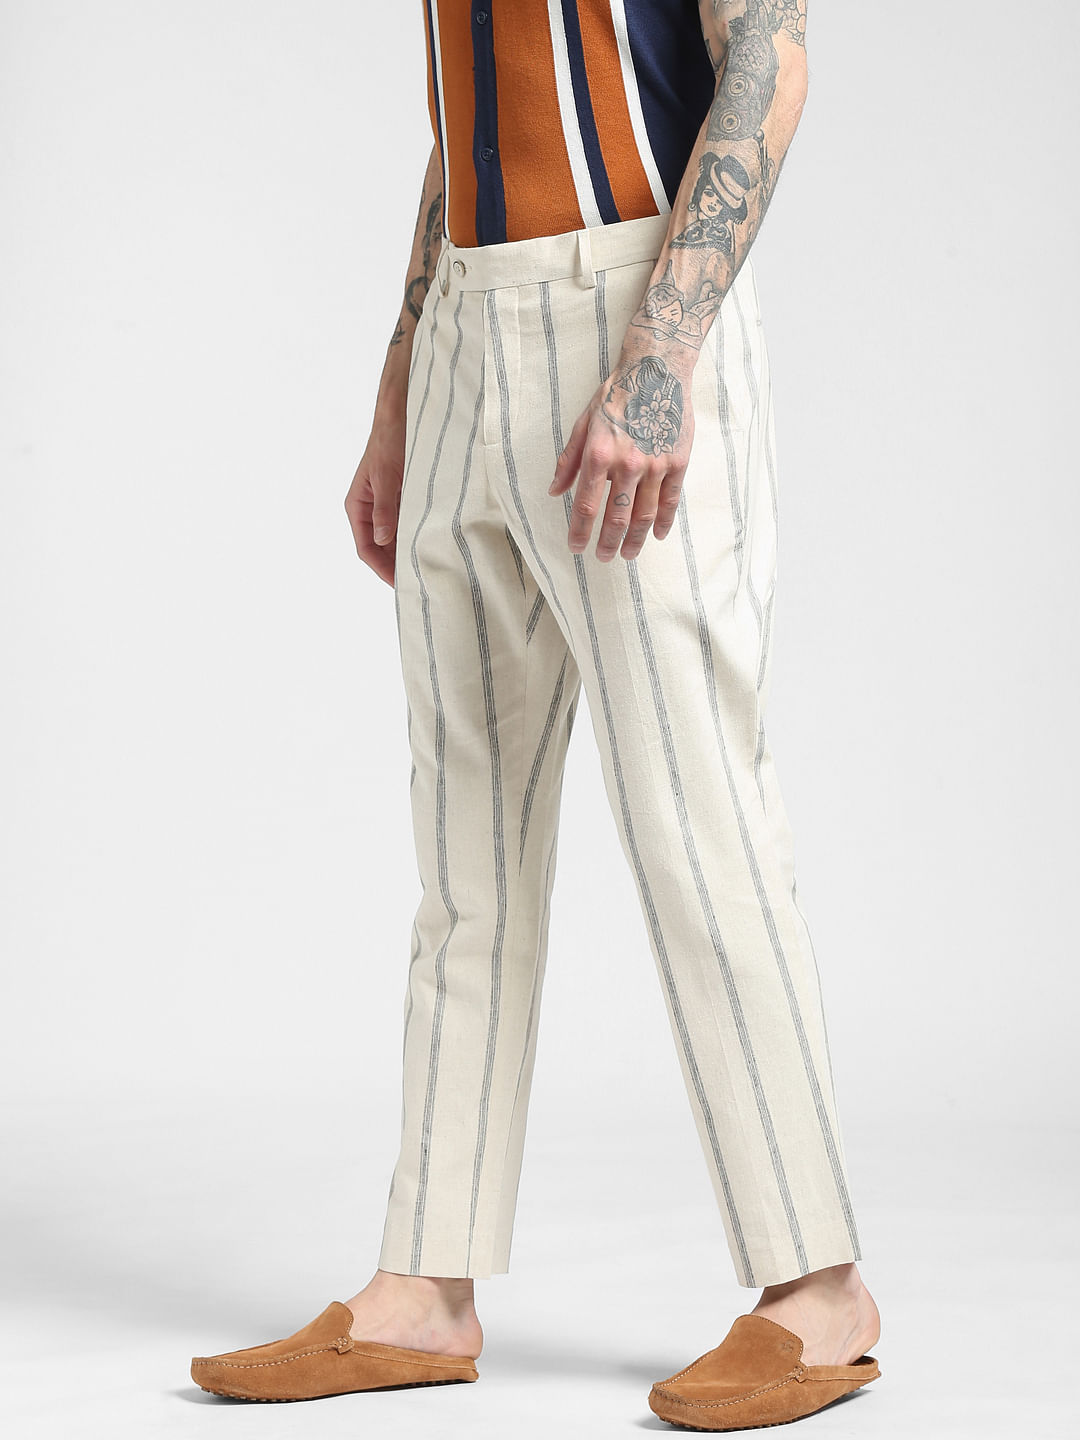 Trouser Pant Mens Formal Non Pleated Stripe Trouser  MT114